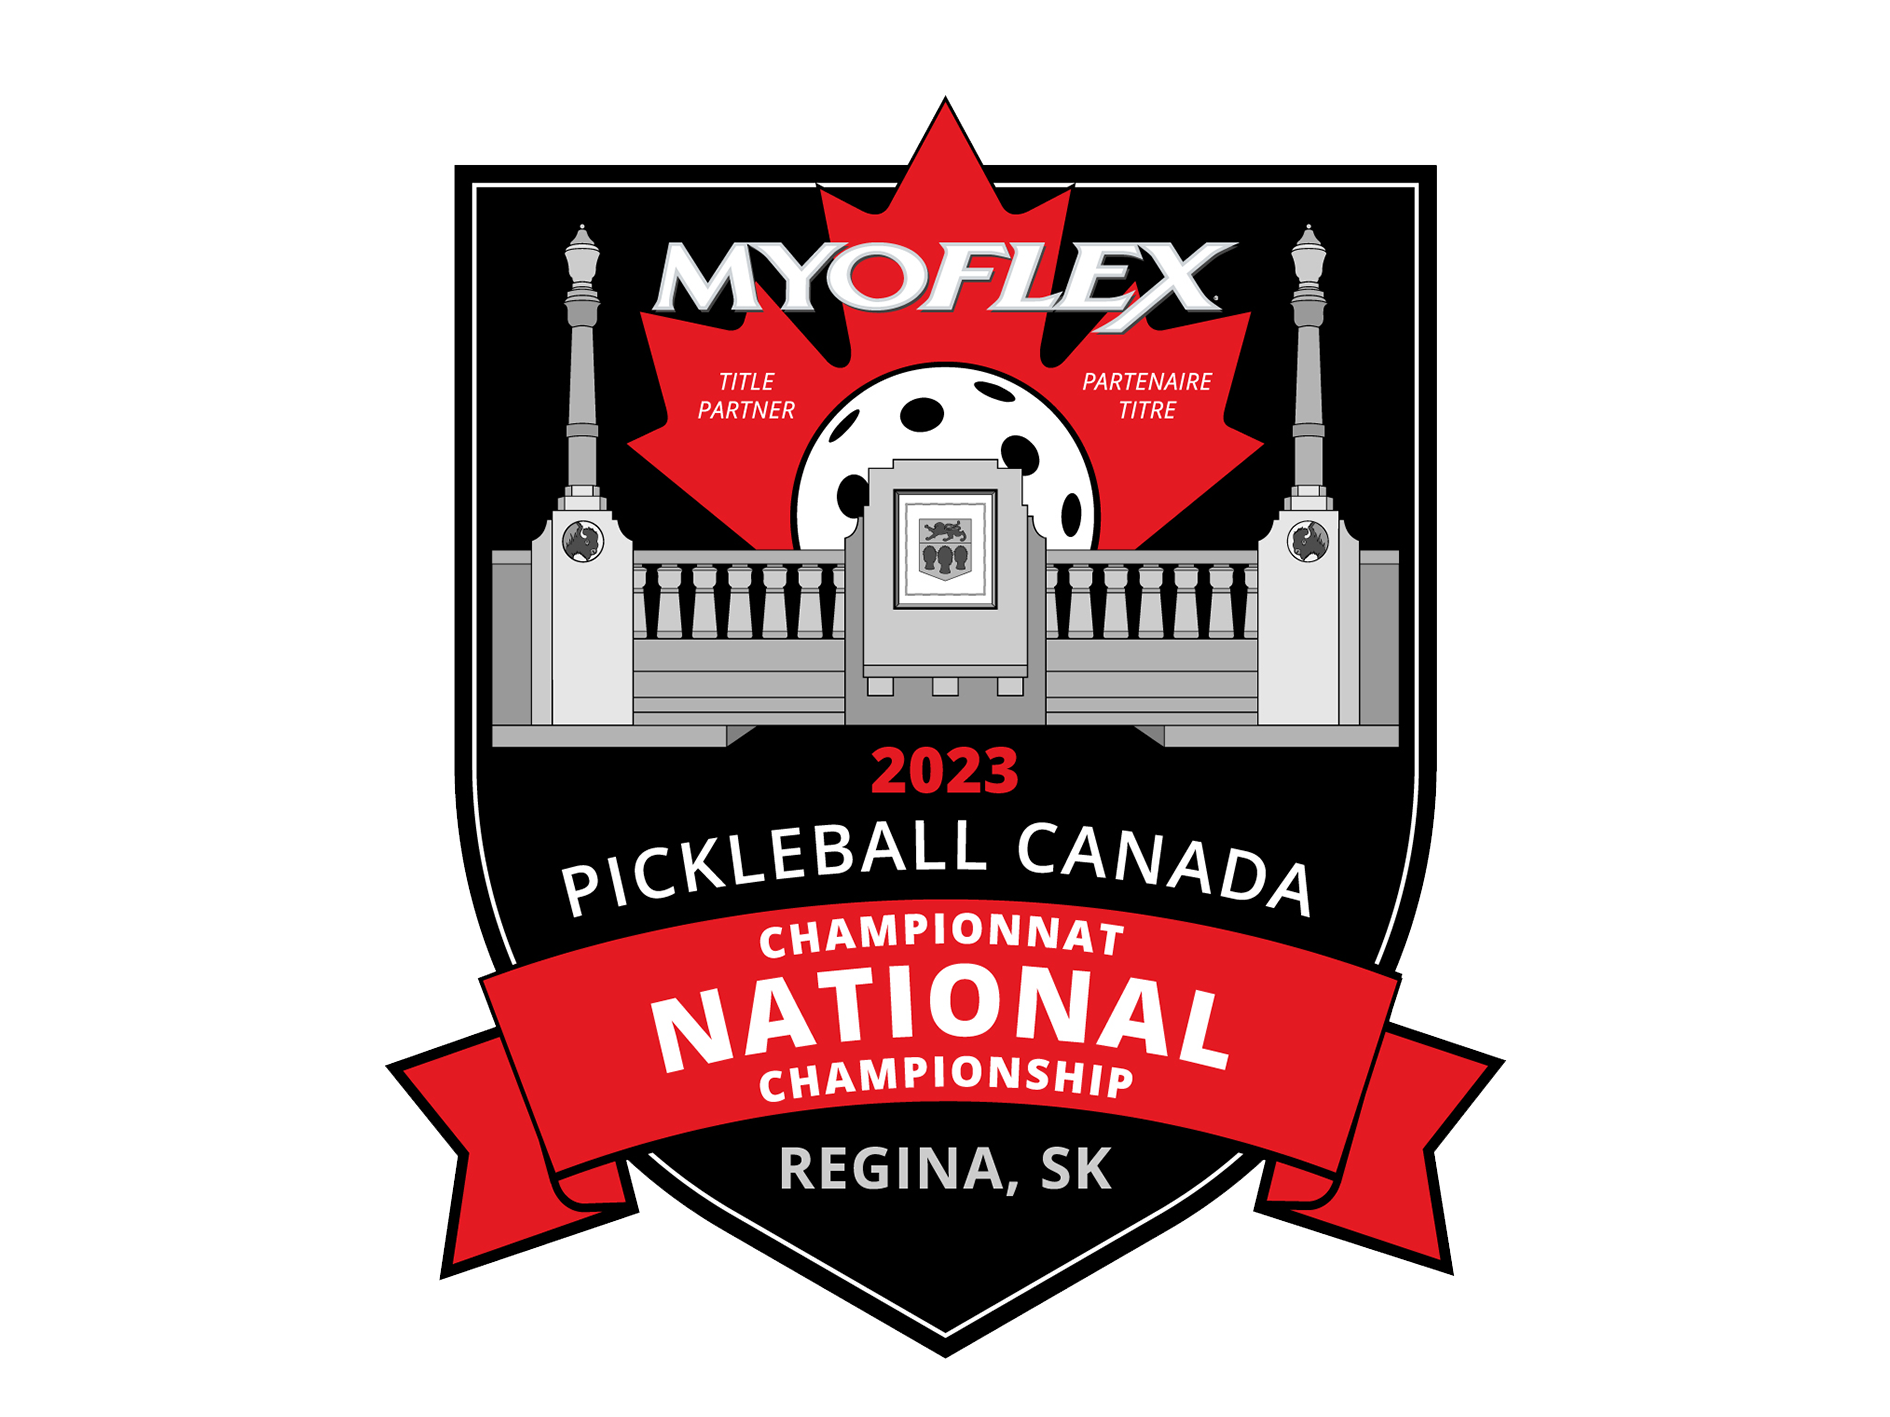 Myoflex®2023 Pickleball Canada National Championship